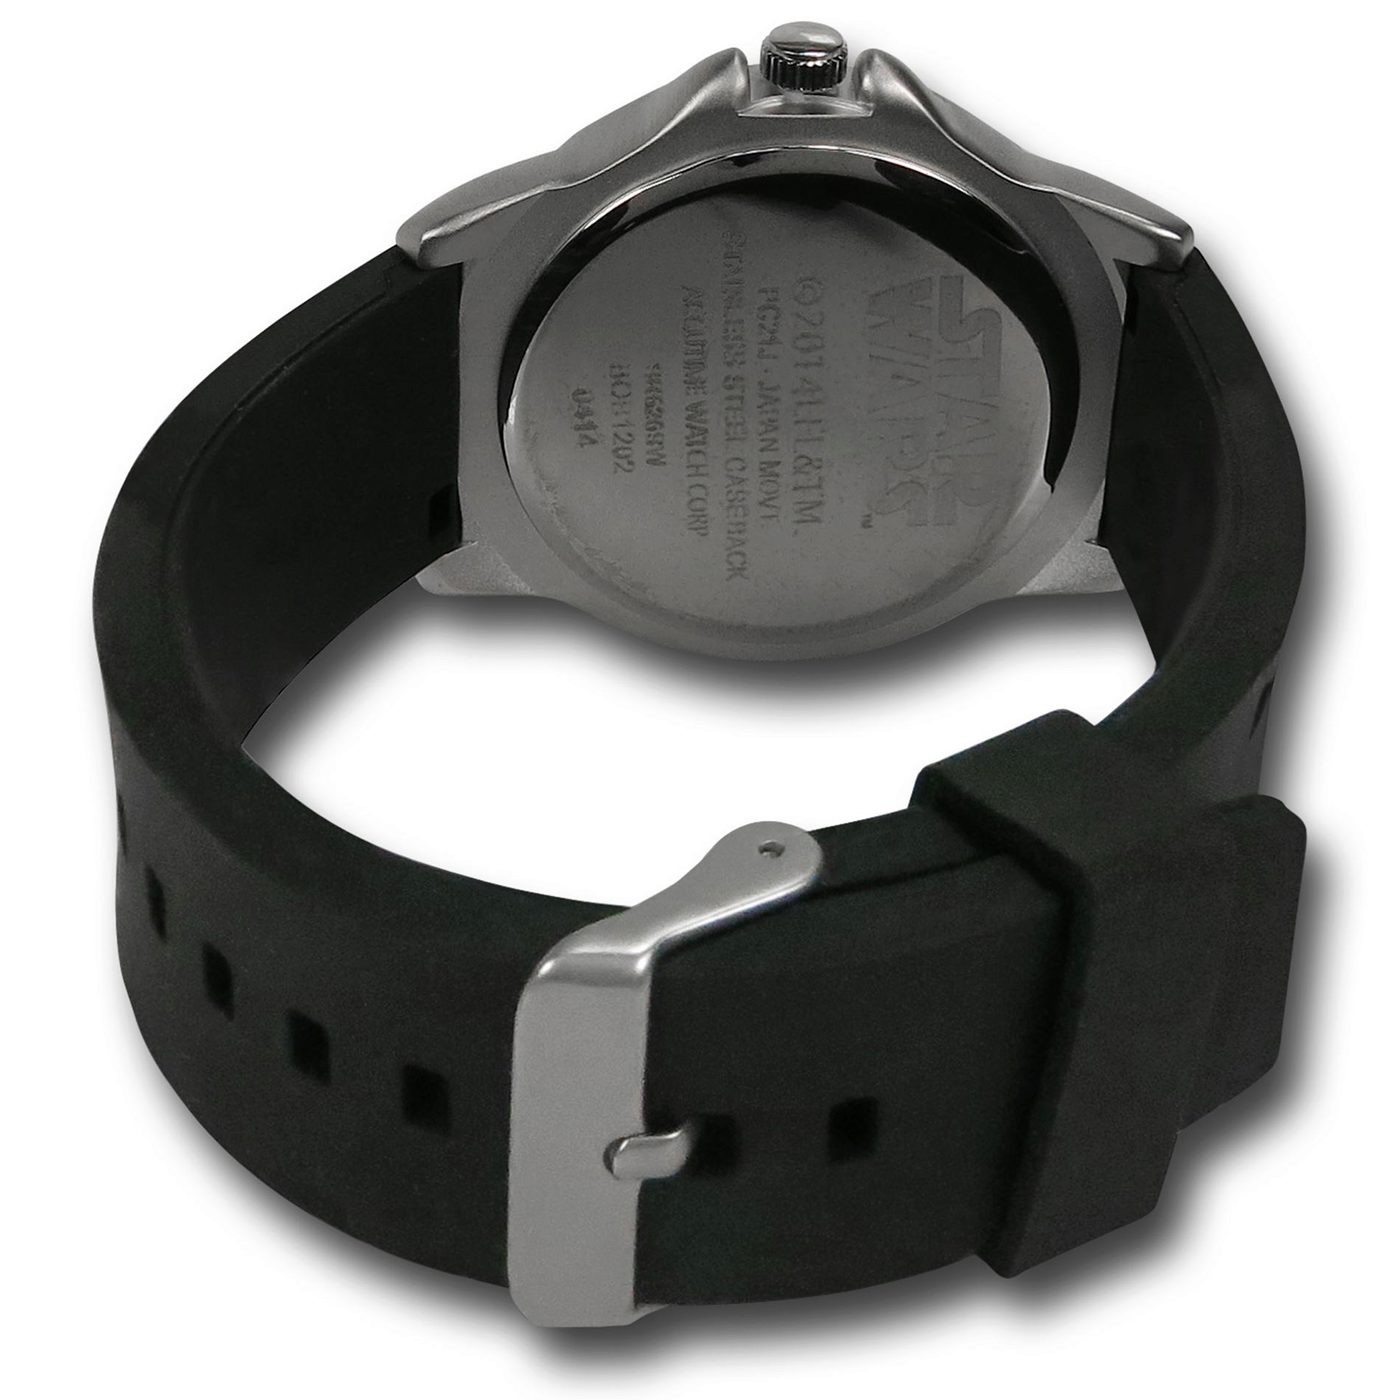 Star Wars Boba Fett Helmet Watch with Silicone Band